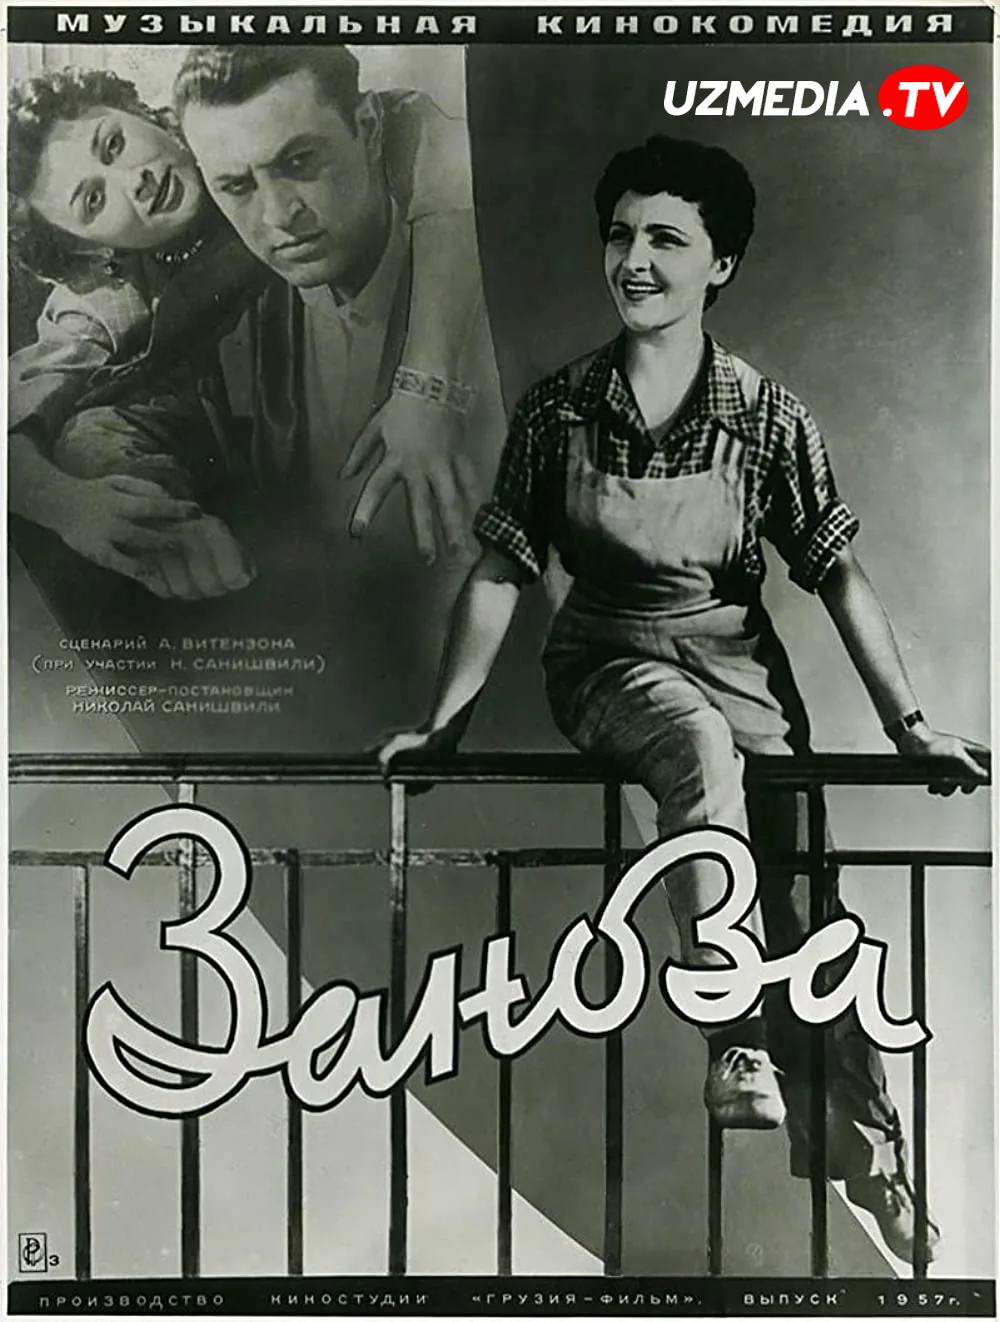 Zirapcha / Zanoza Gruziya-SSSR filmi Uzbek tilida O'zbekcha tarjima kino 1956 SD skachat